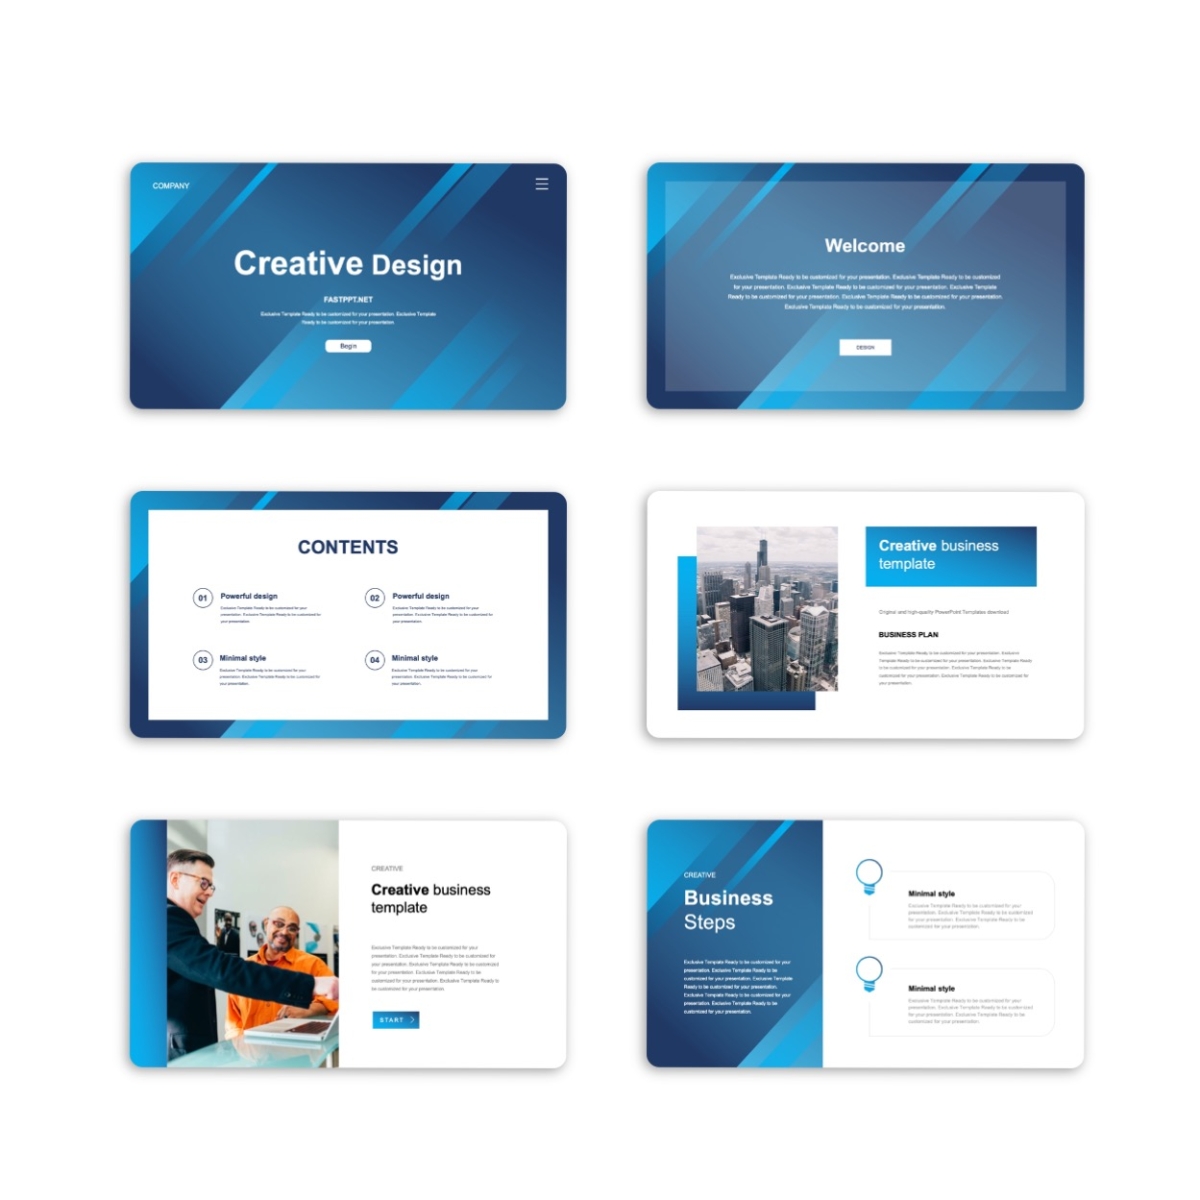 Business Report Creative Design PowerPoint Template